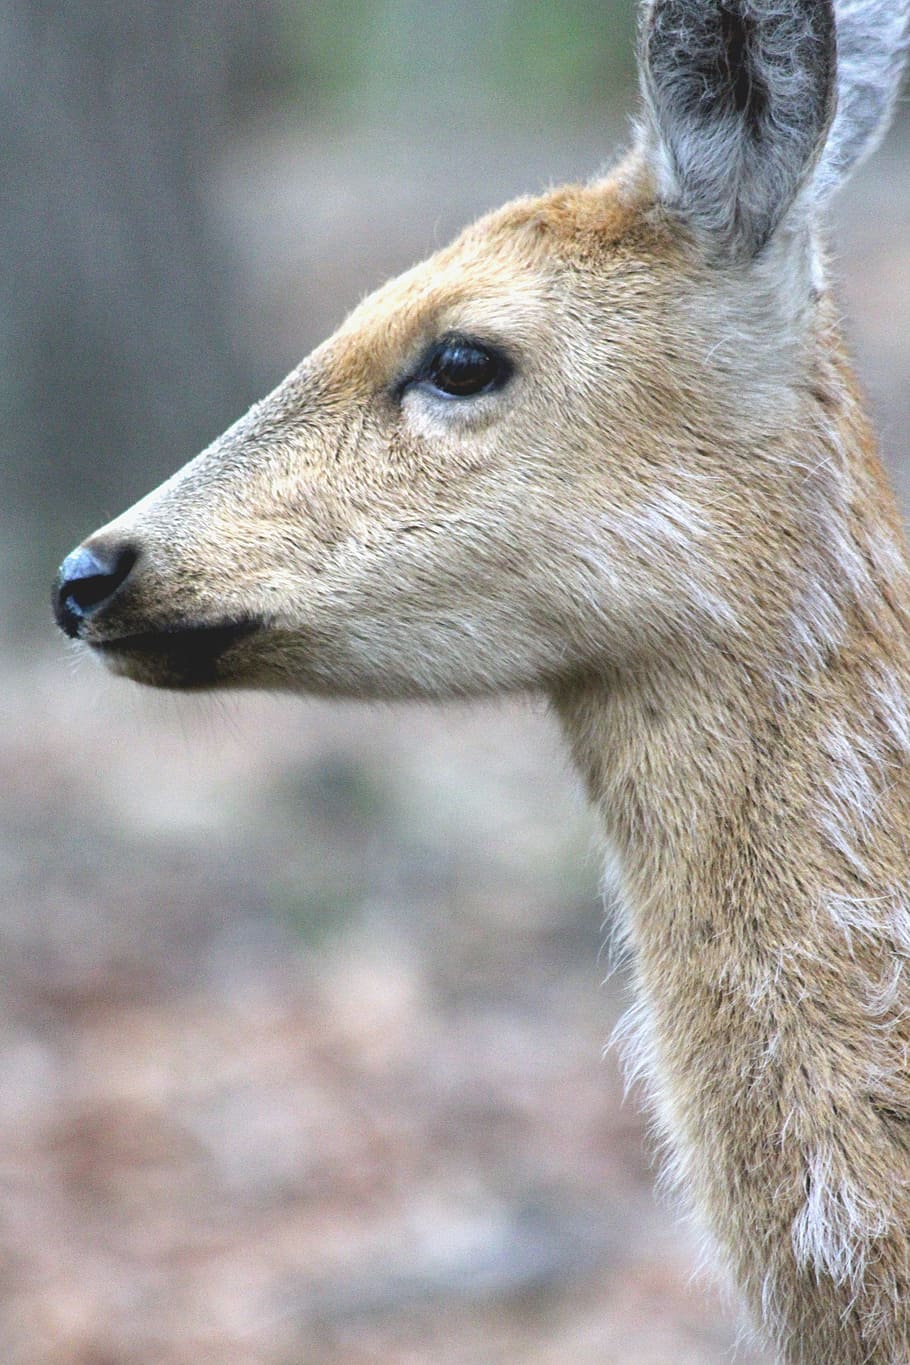 spotted deer, doe, cervus nippon, head, animal, nature, wild animal, ovis, deer, view